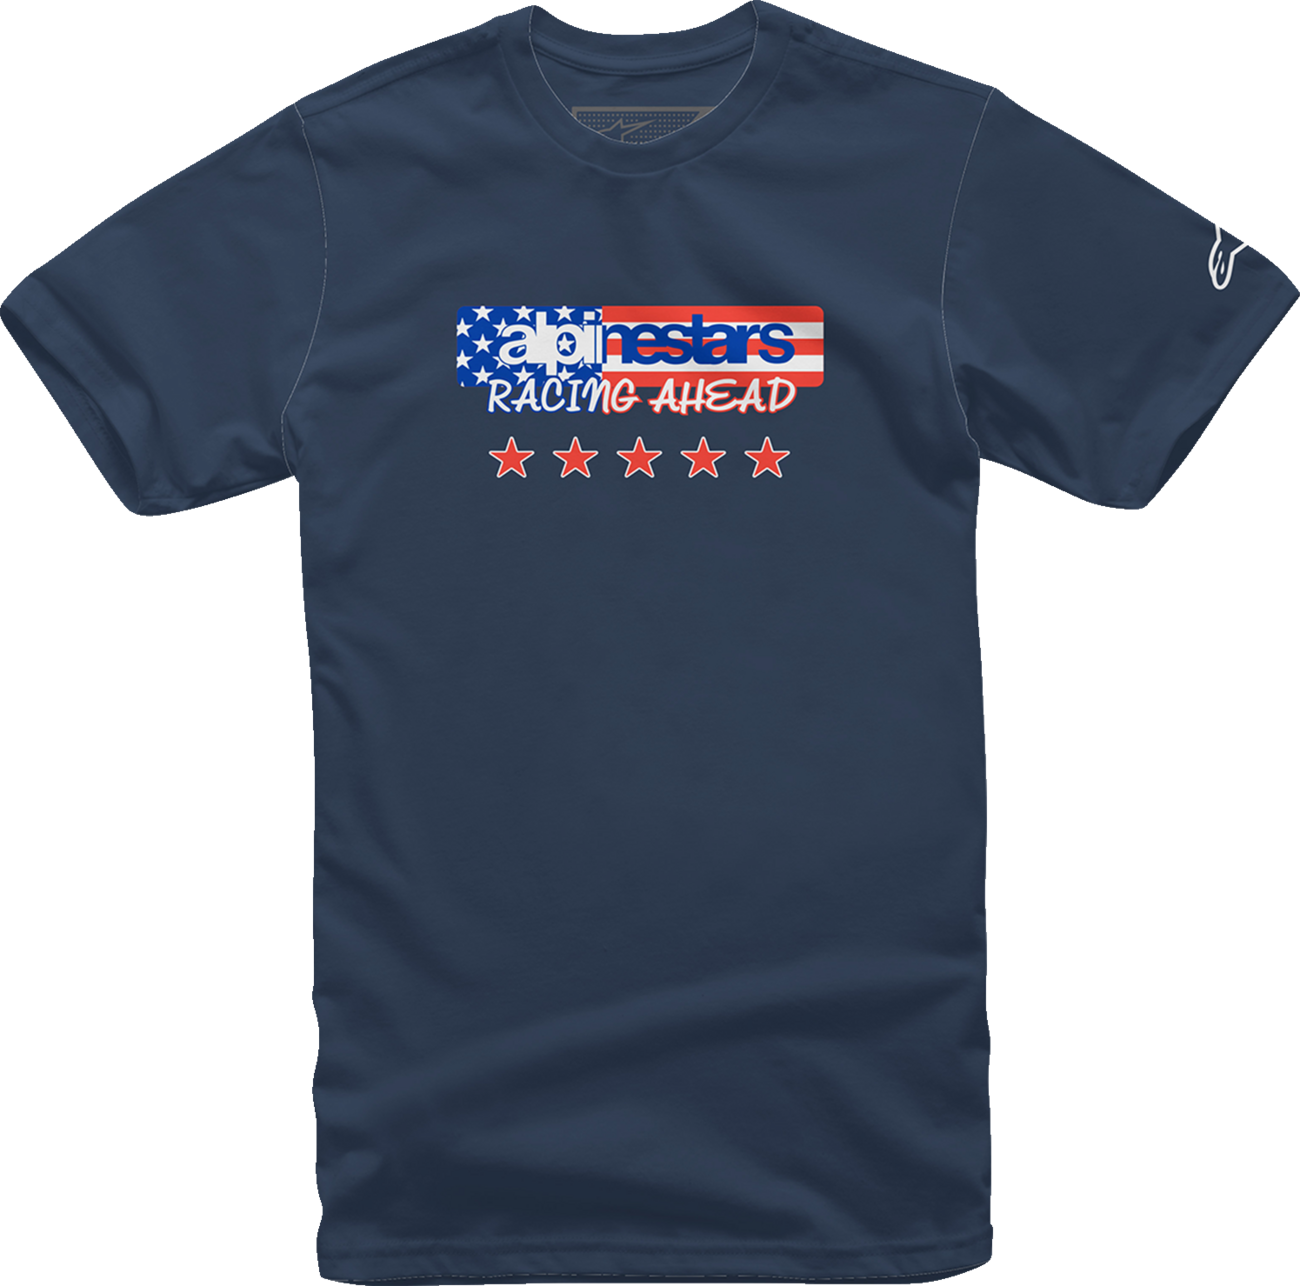 Camiseta ALPINESTARS USA Again - Azul marino - Grande 12137261070L 